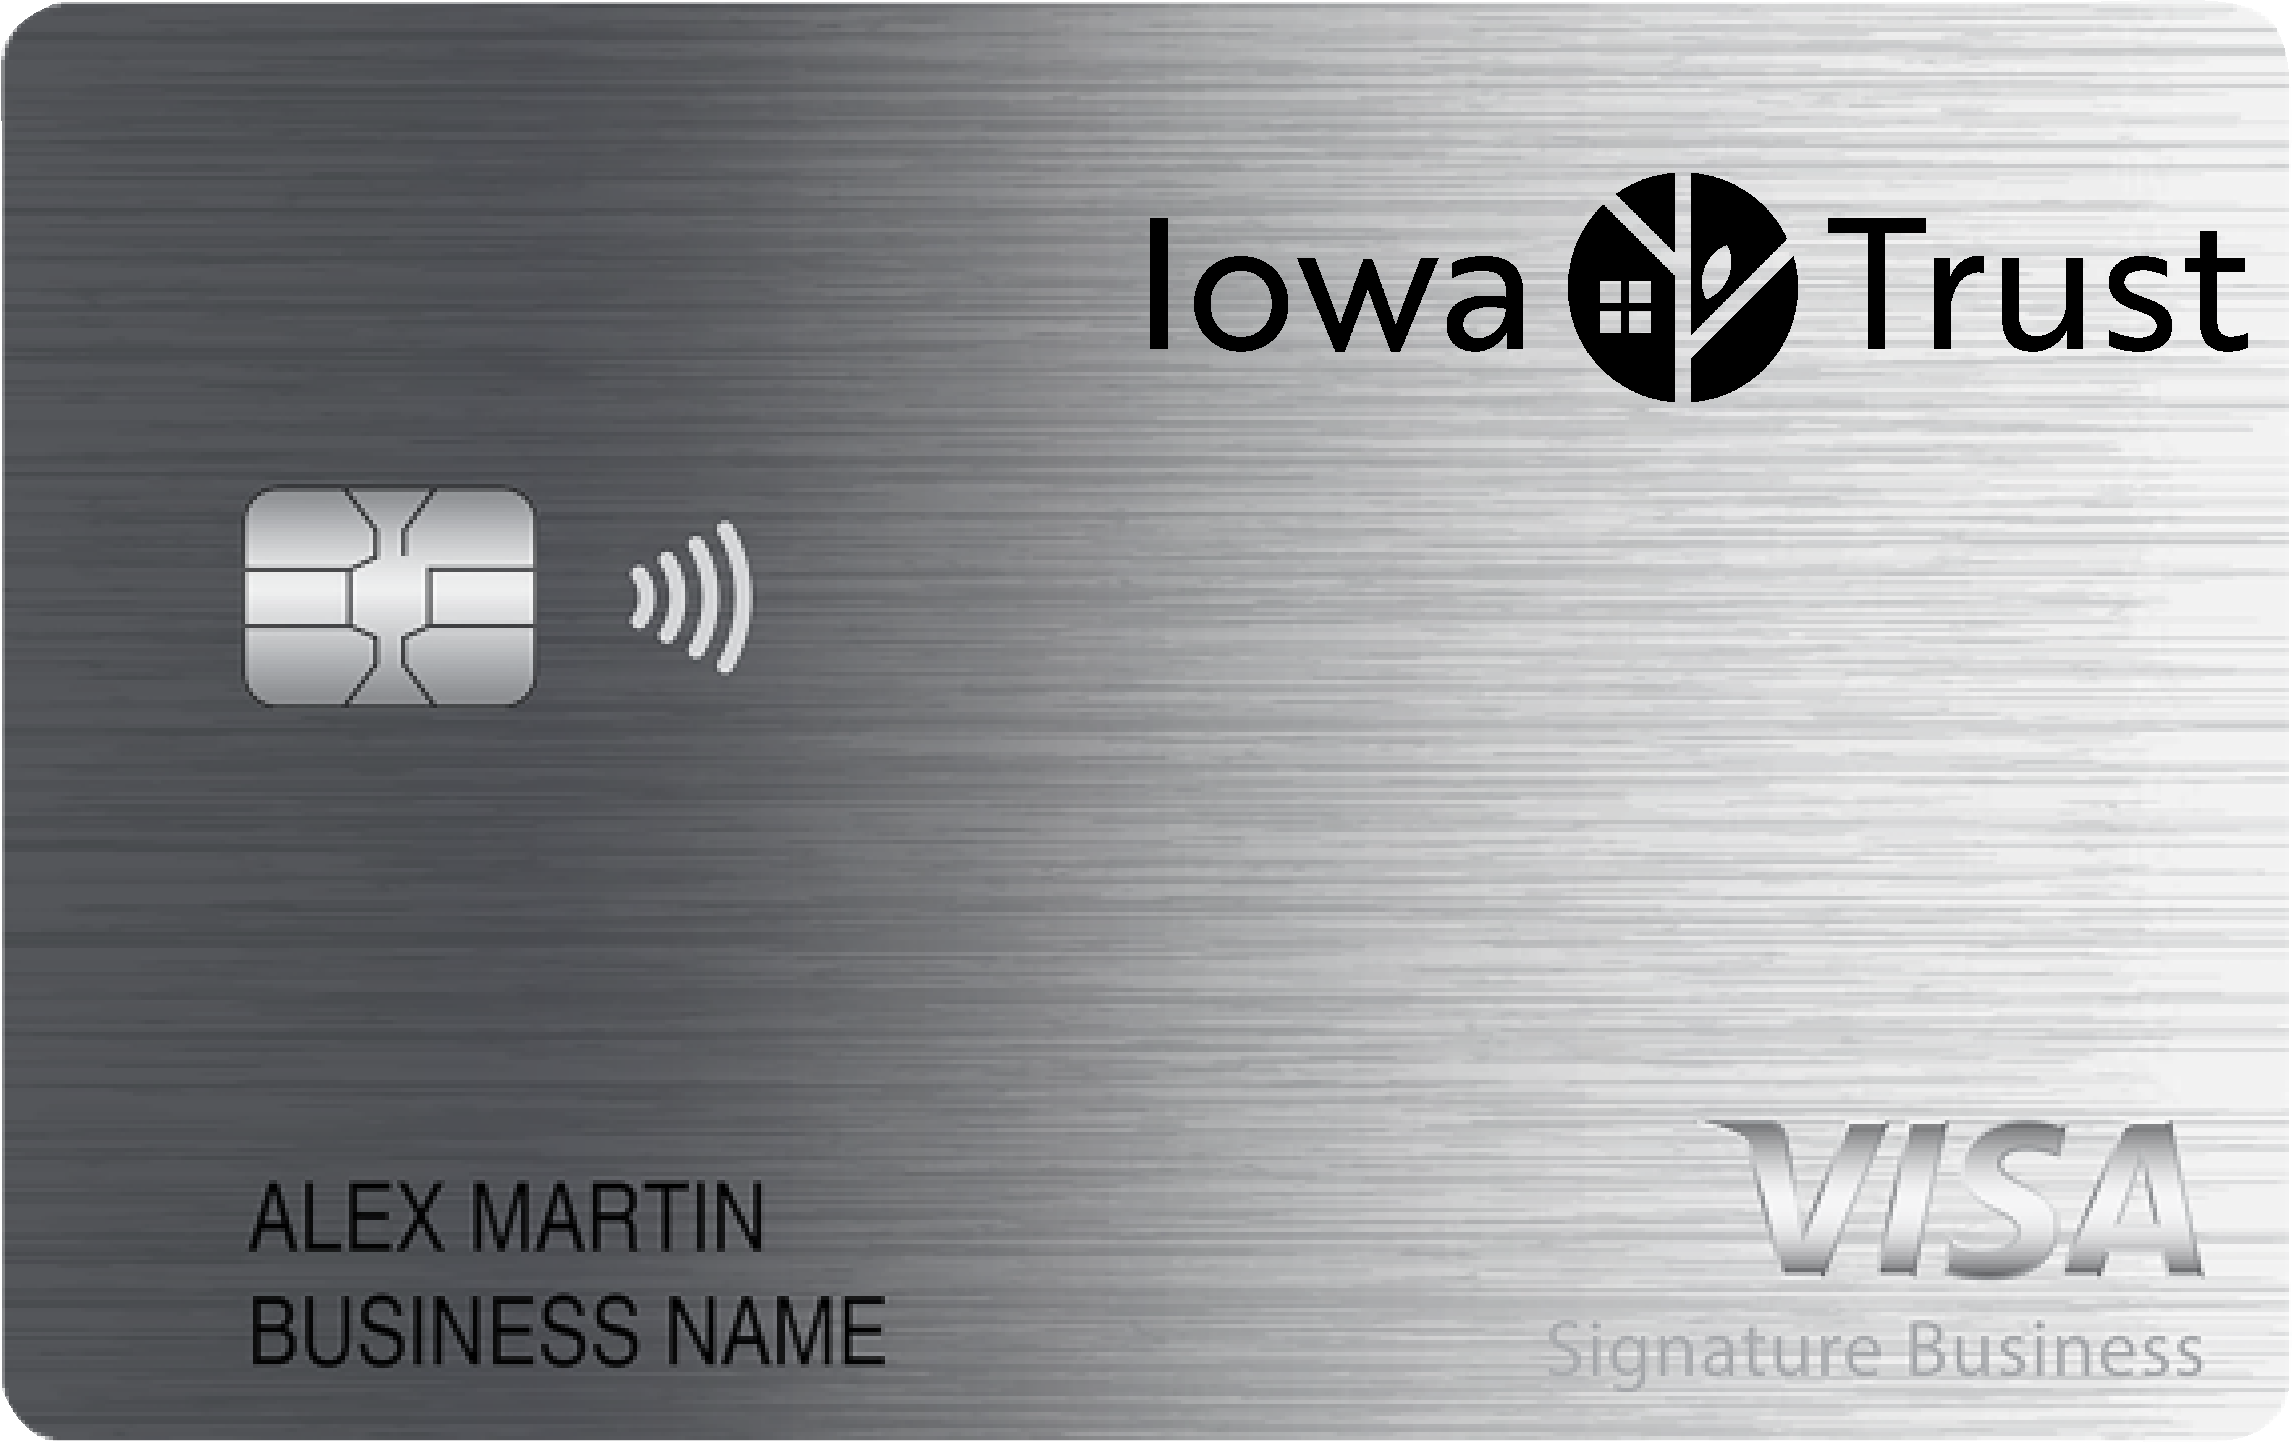 Iowa Trust & Savings Bank Smart Business Rewards Card